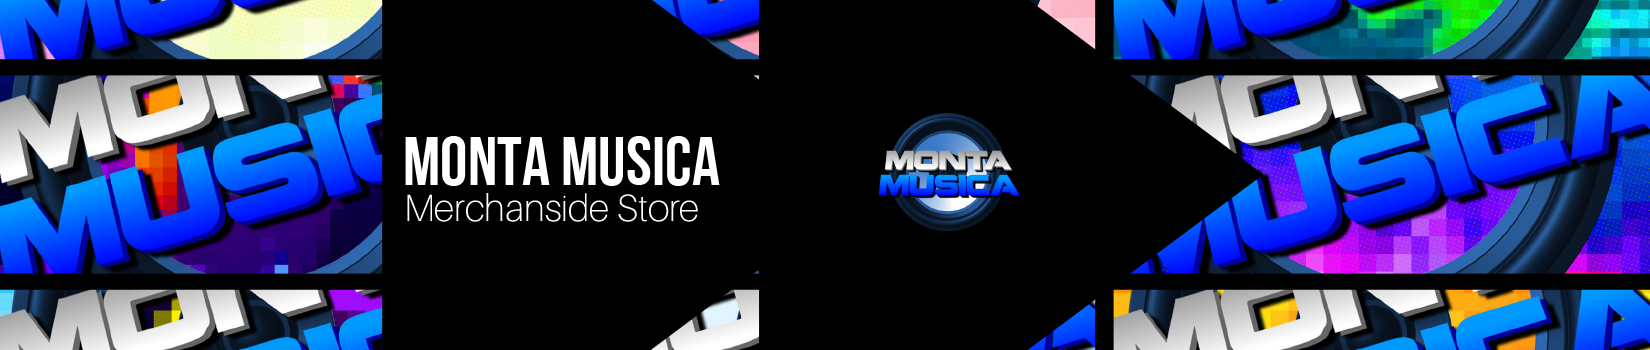 Monta Musica Official Merchandise